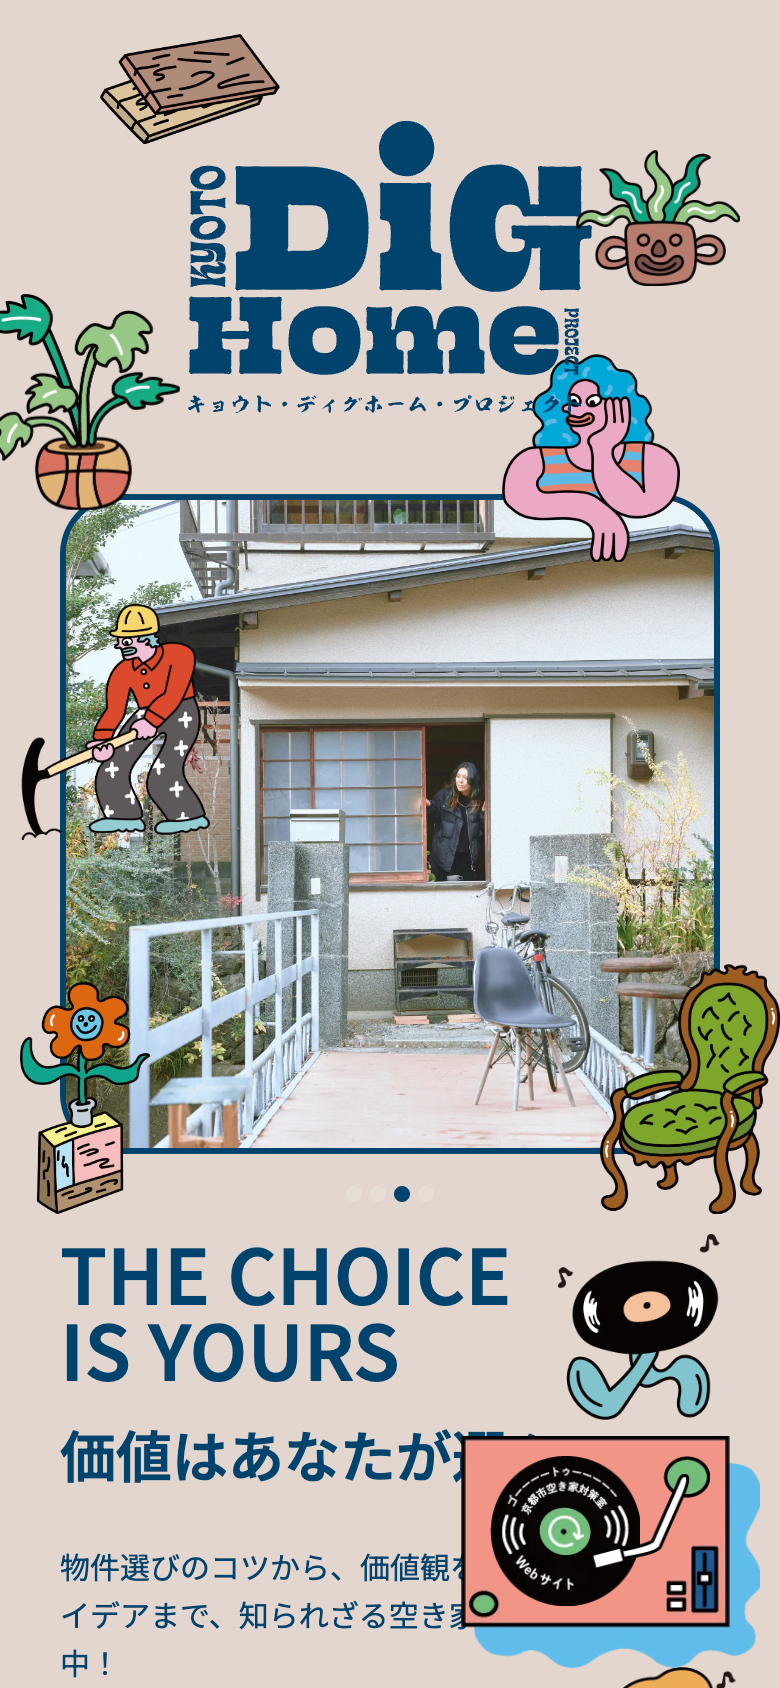 Kyoto Dig Home Projectのスマートフォンでみたファーストビューの画像